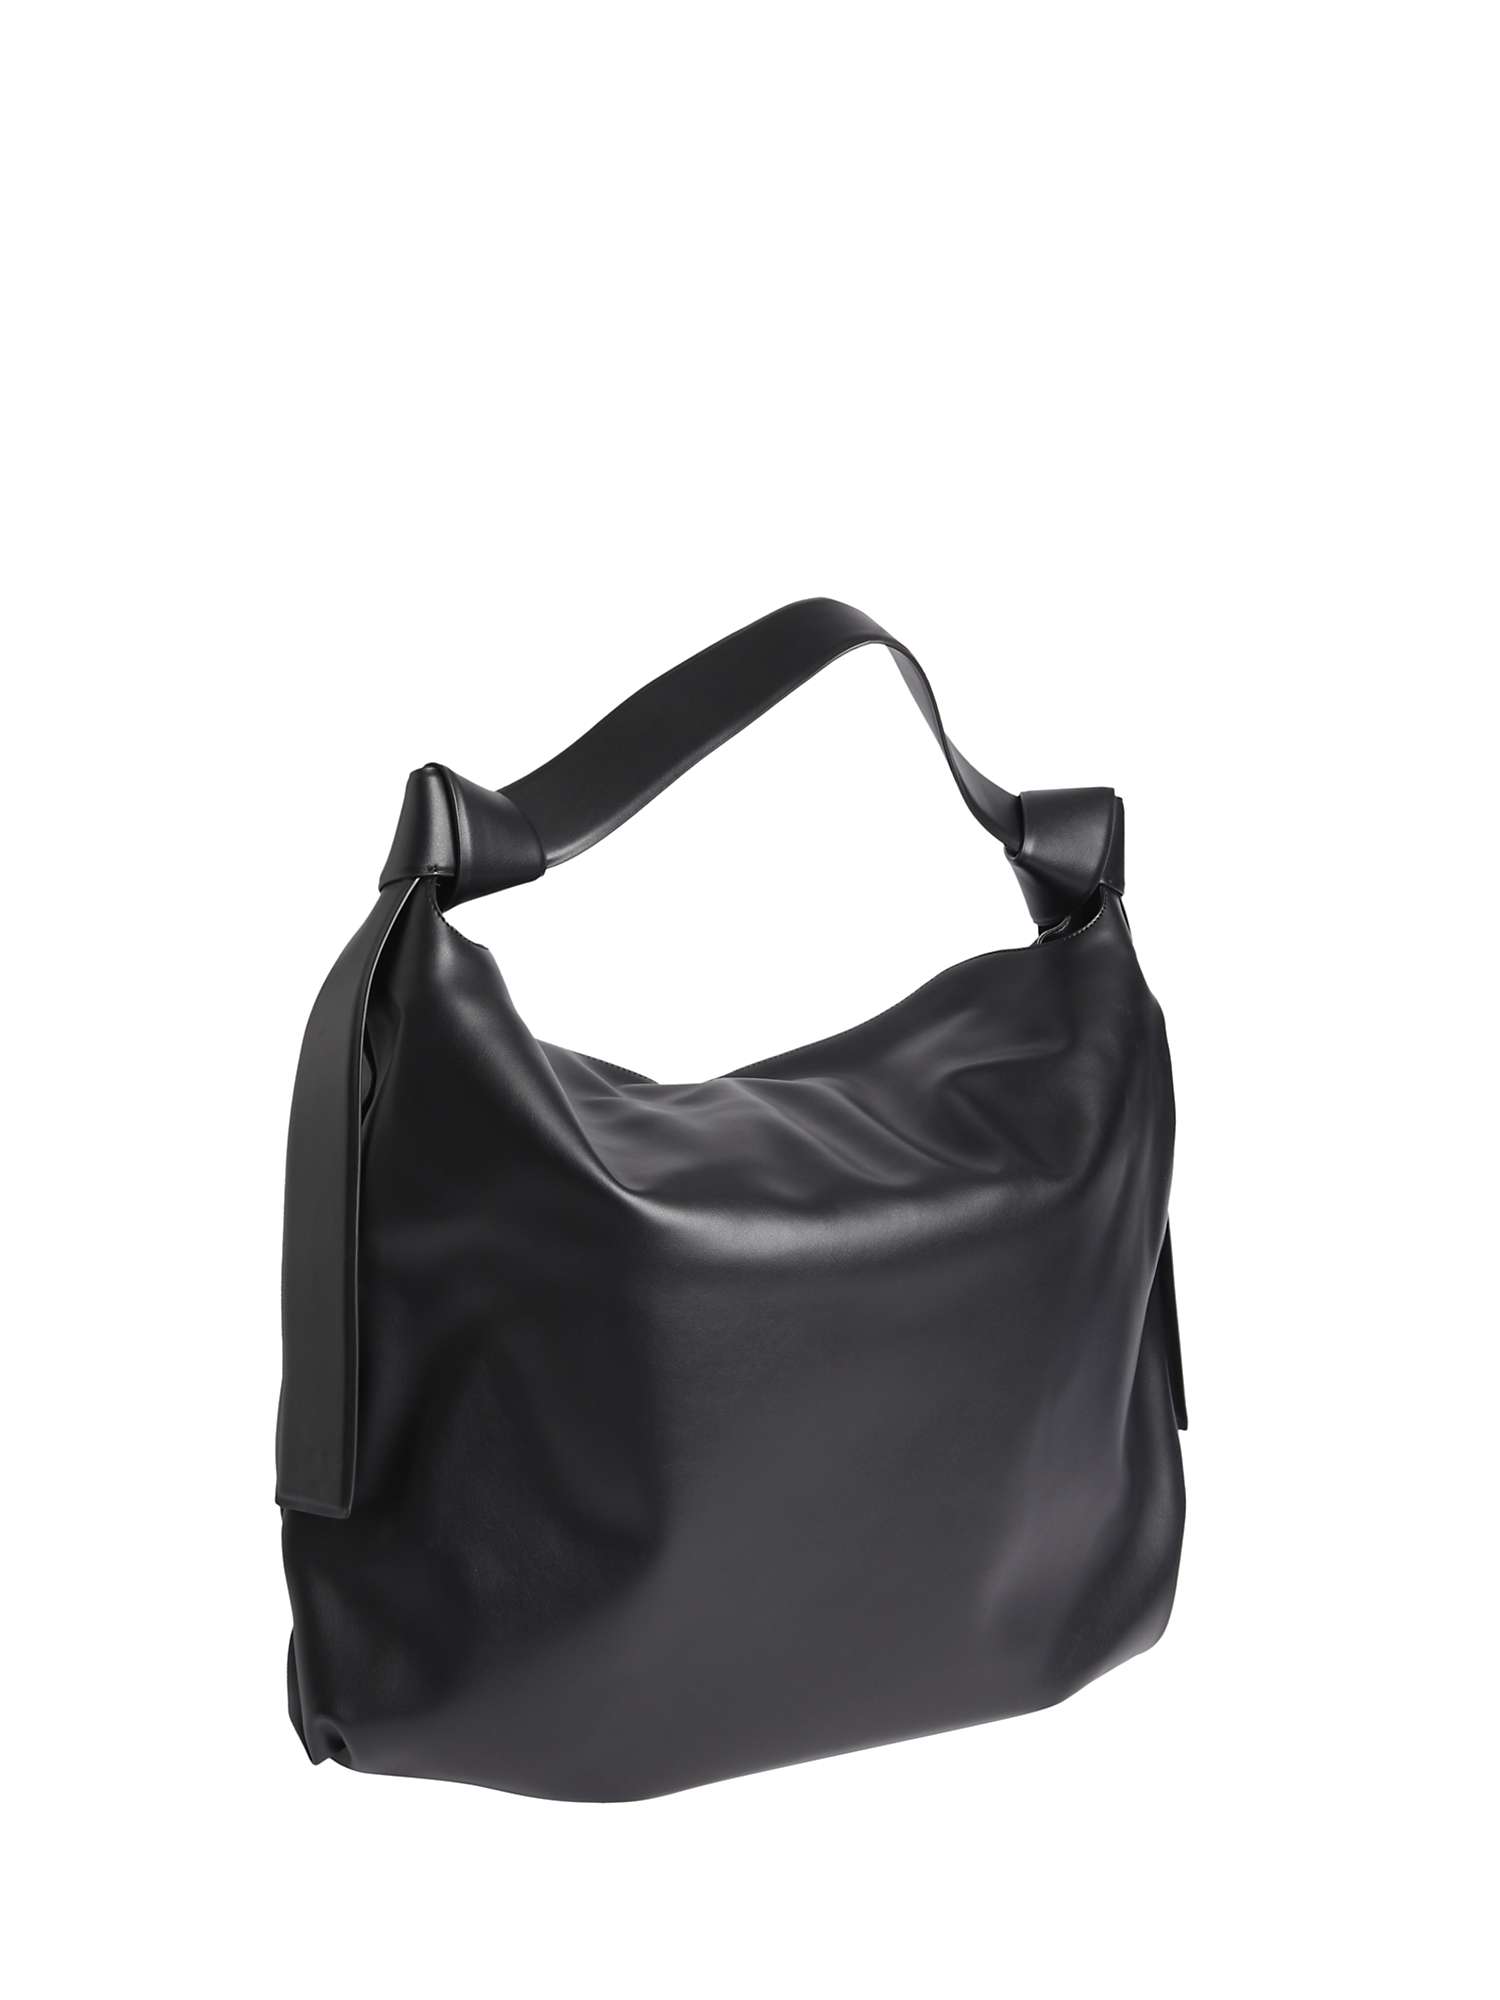 Calvin Klein Tie Knot Detail Tote Bag, Black at John Lewis & Partners